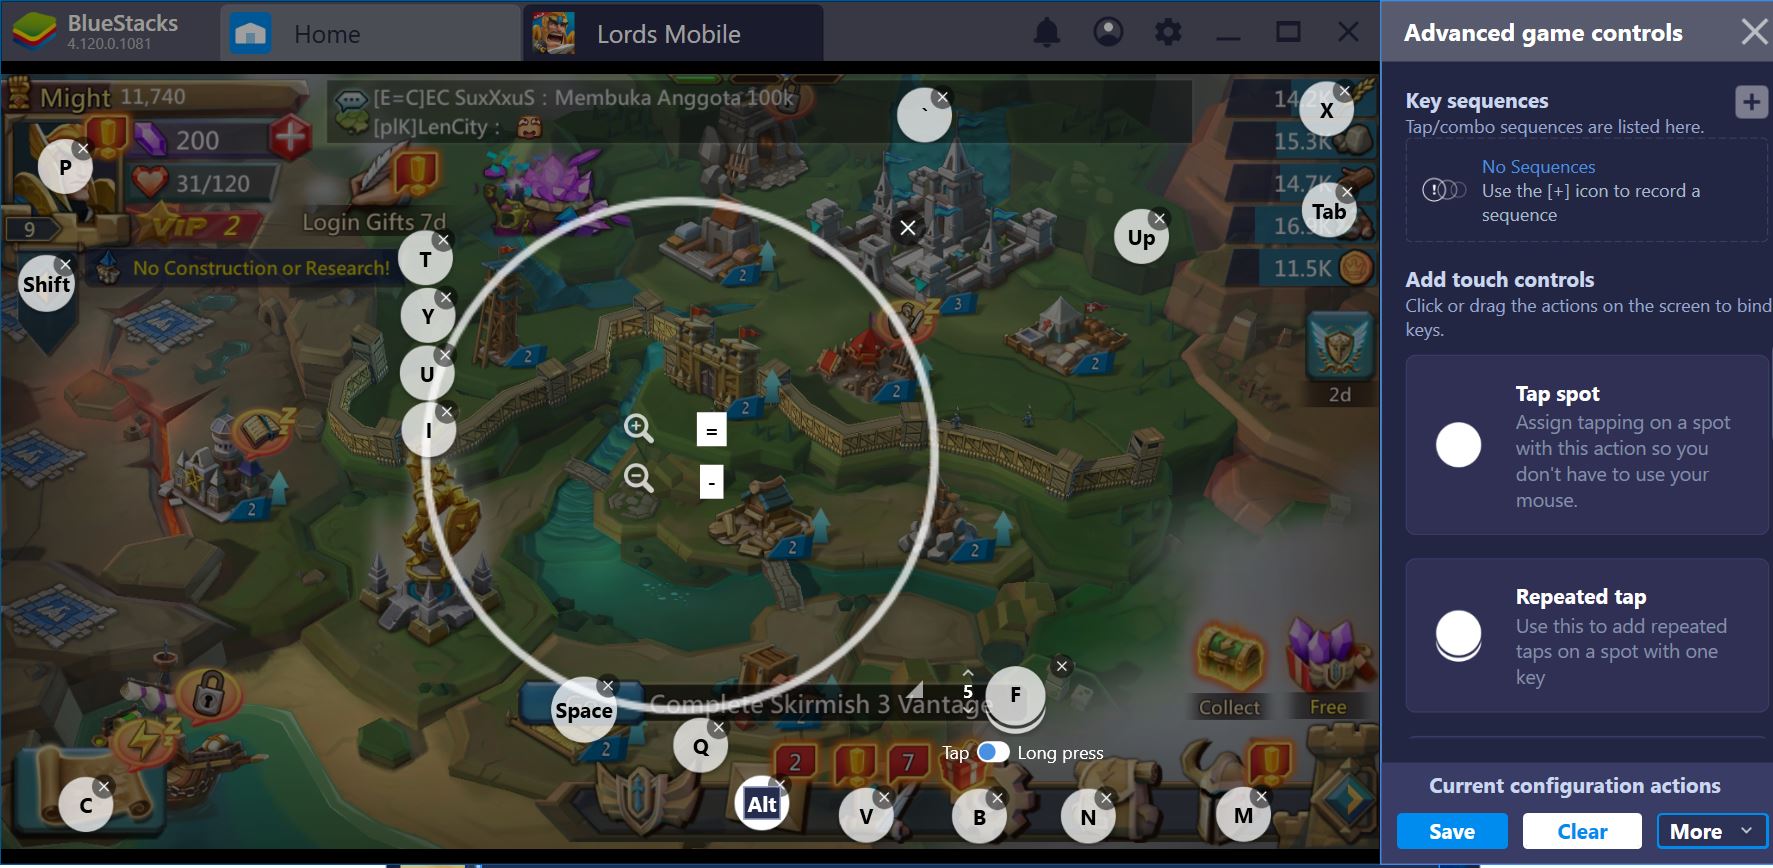 Lords Mobile Screenshots · SteamDB